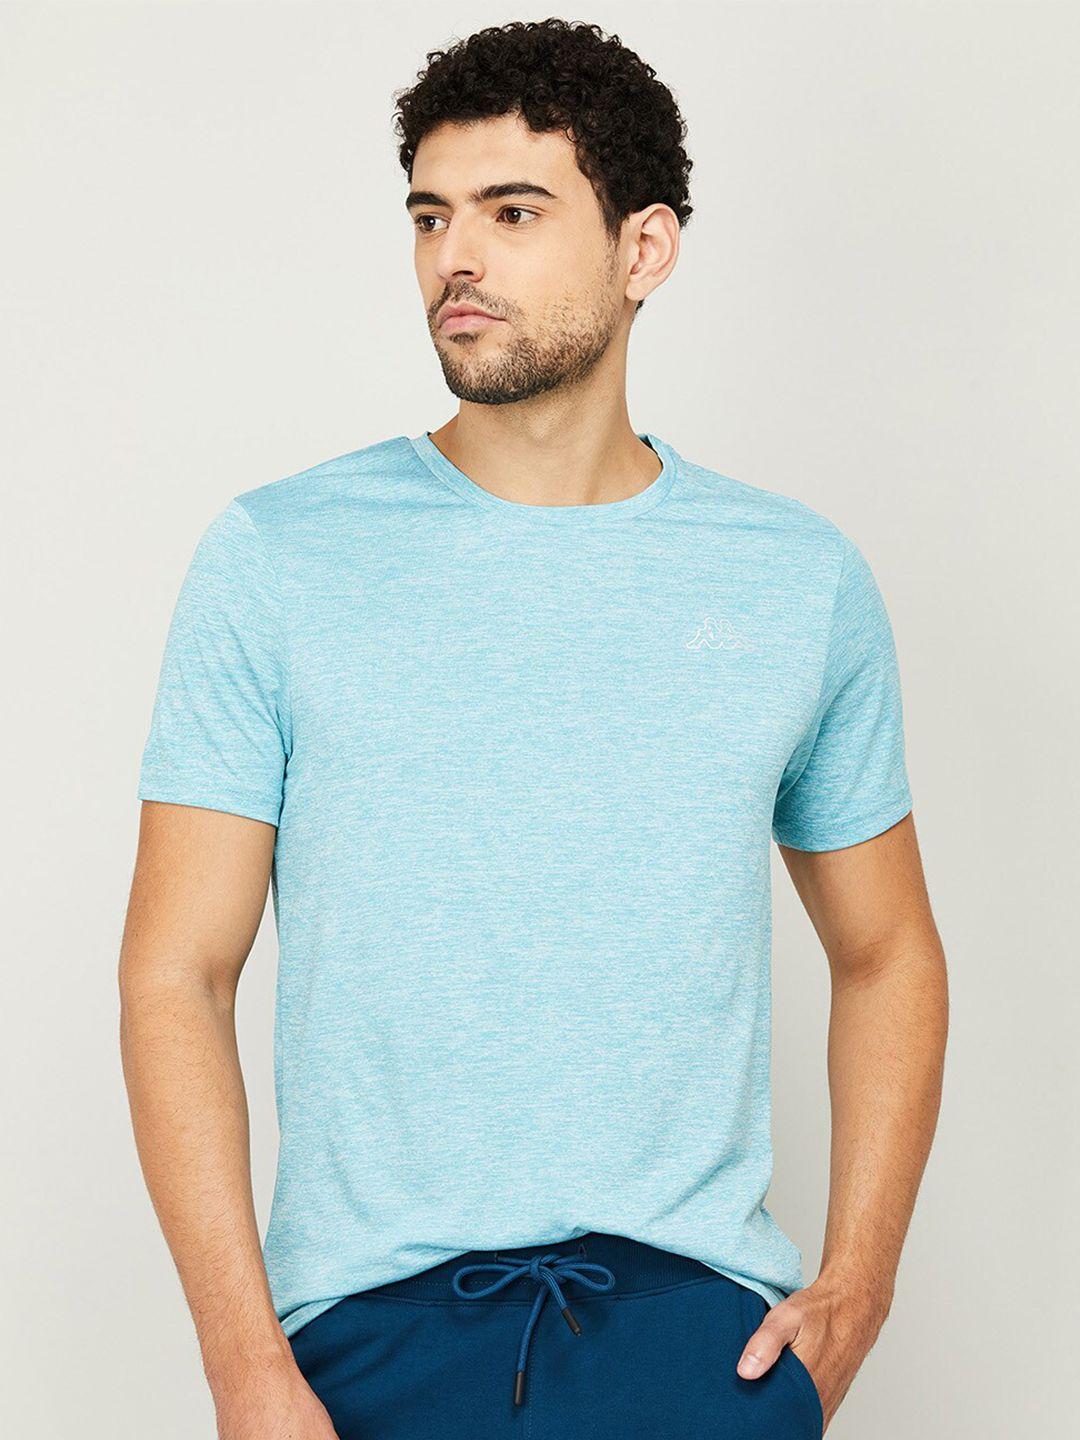 kappa-men-blue-brand-logo-slim-fit-t-shirt